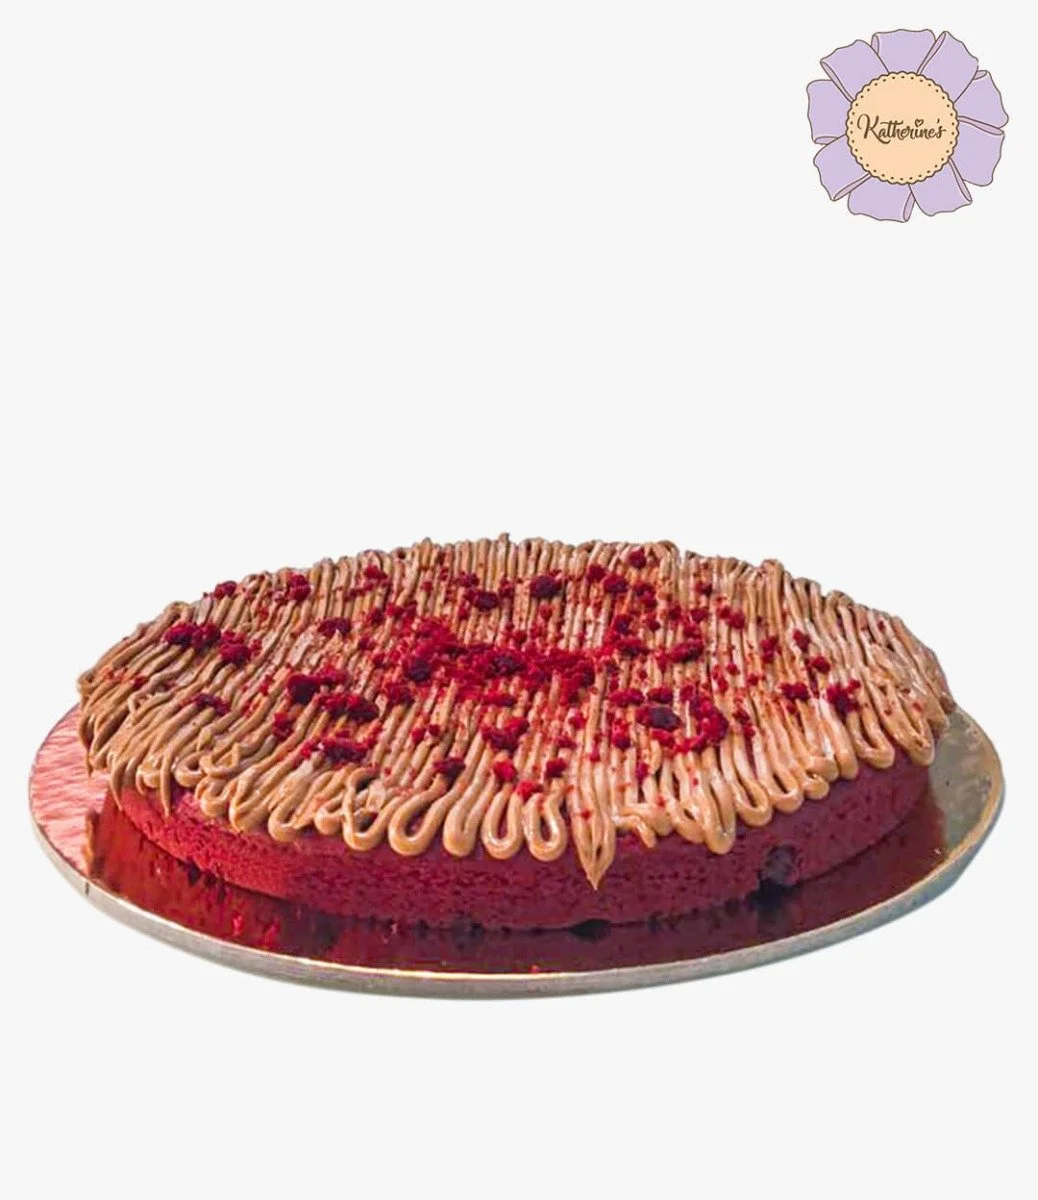 Red Velvet & Lotus Cookie Cake   